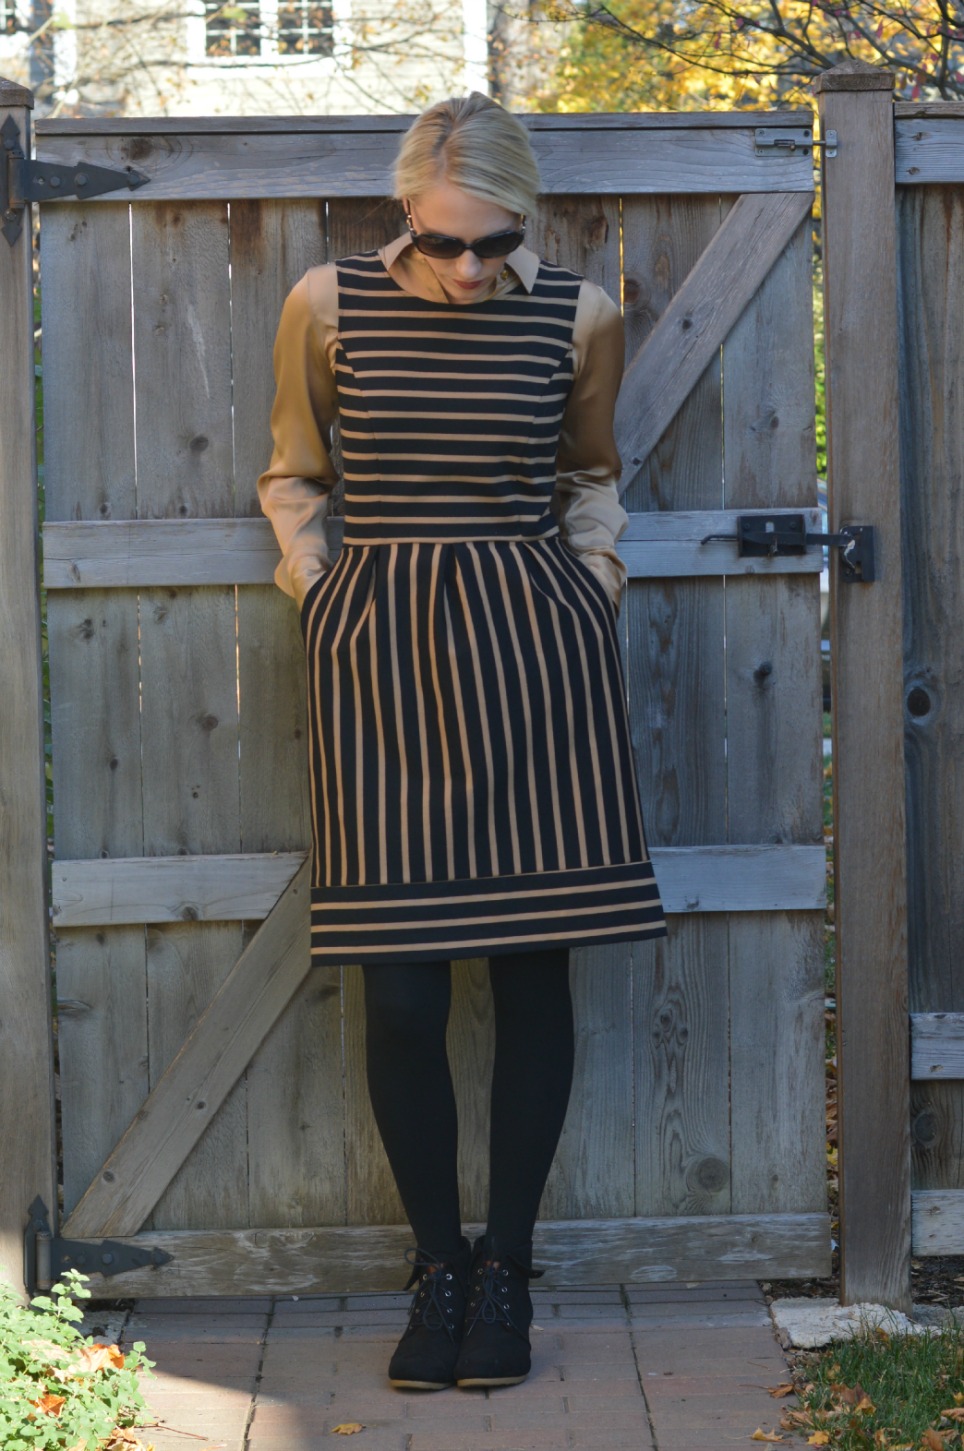 Transition Fashion for Fall: Stripes